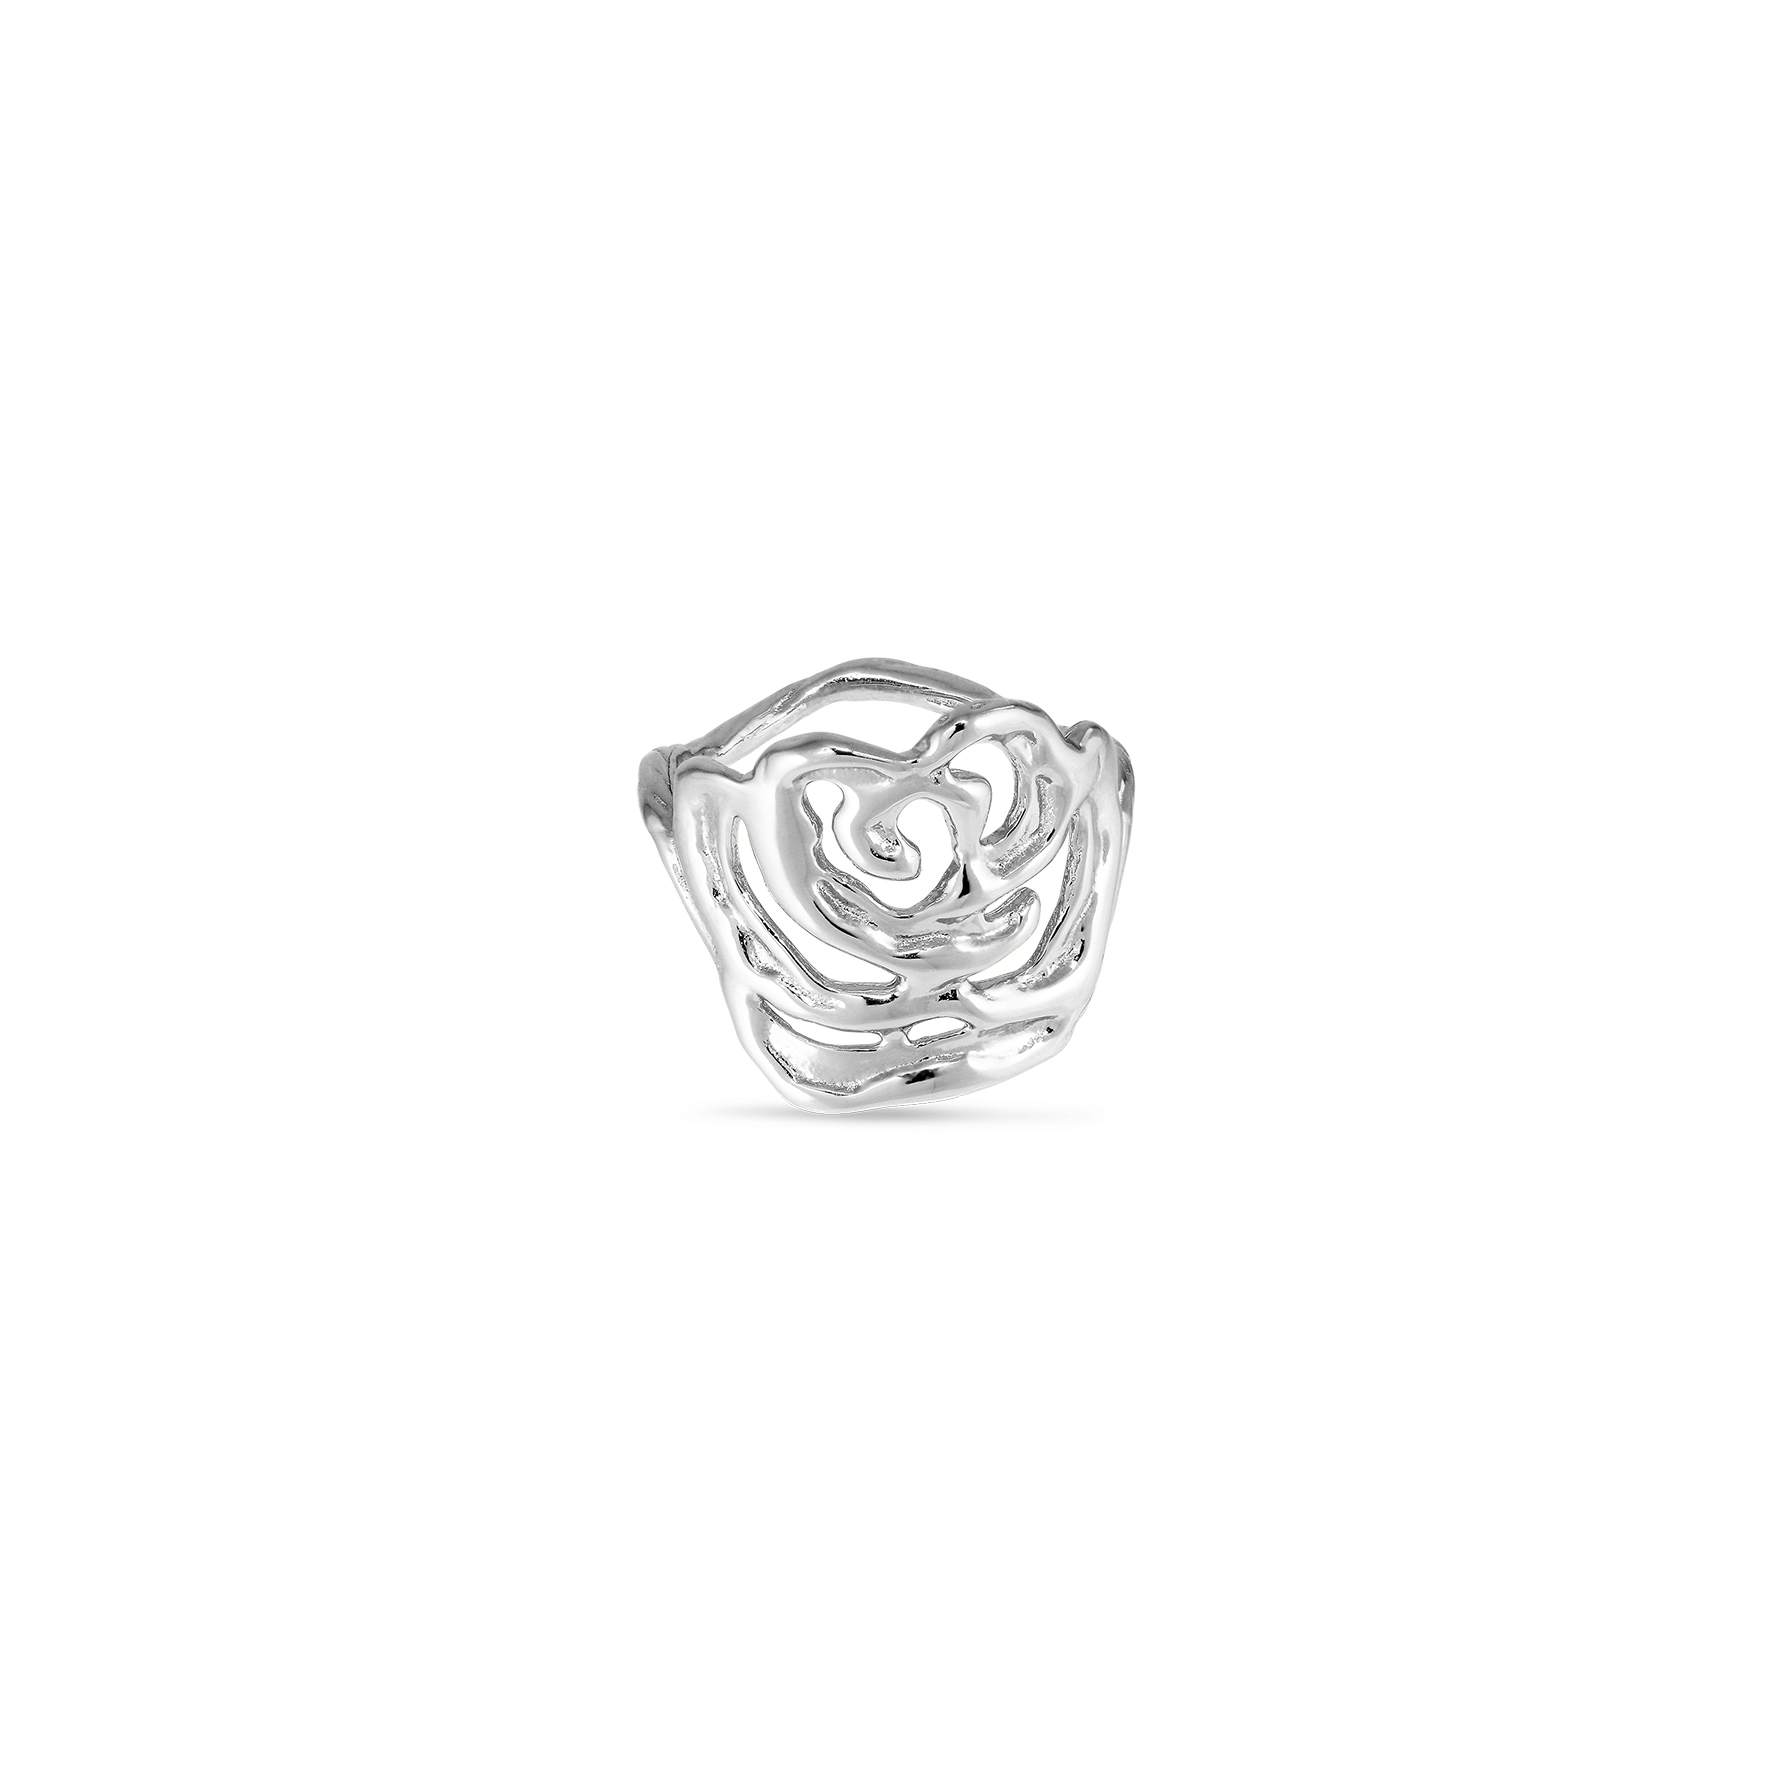 Big Rose Ring from Jane Kønig in Silver Sterling 925